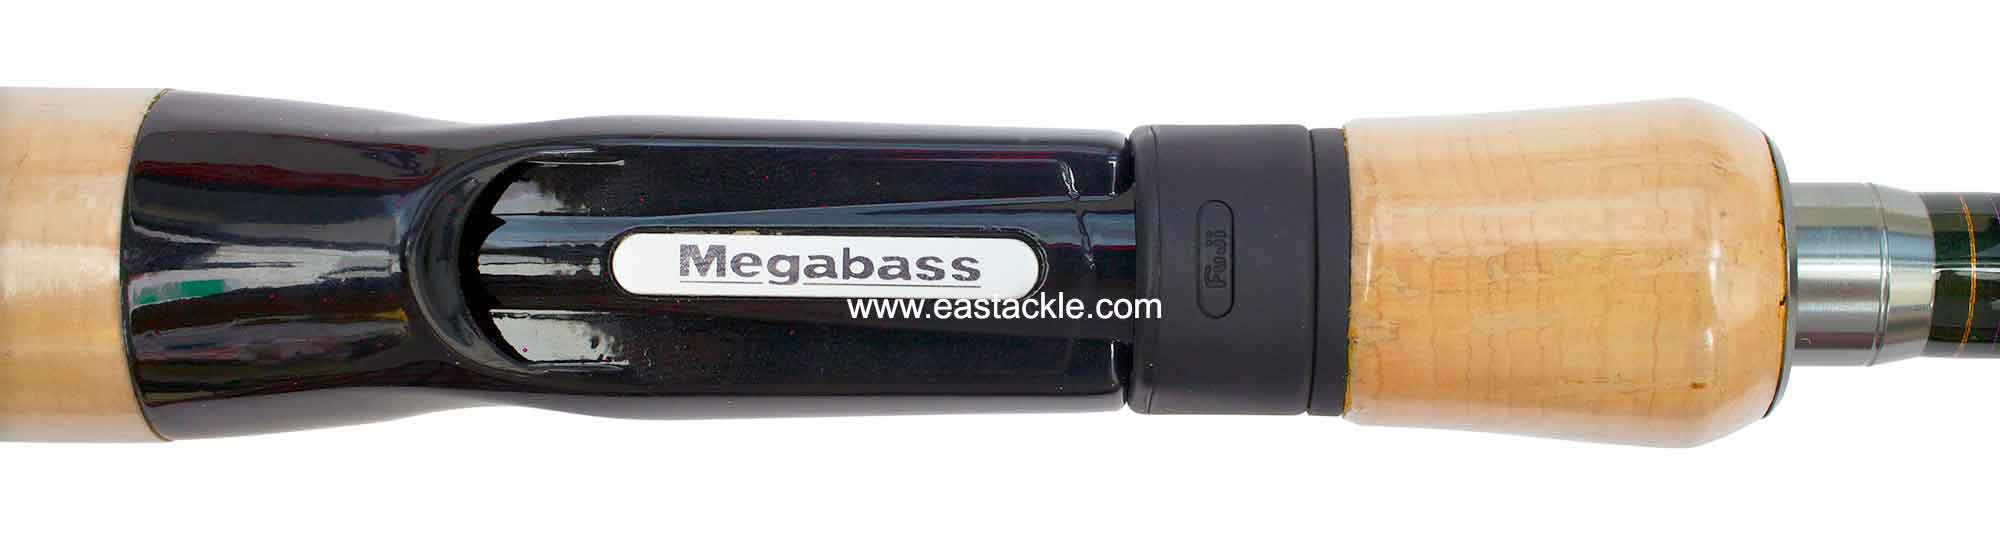 Megabass - Orochi XX - F4.1/2-68XX - JERKBAIT SPECIAL - Bait Casting Rod - Reel Seat Section (Top View)